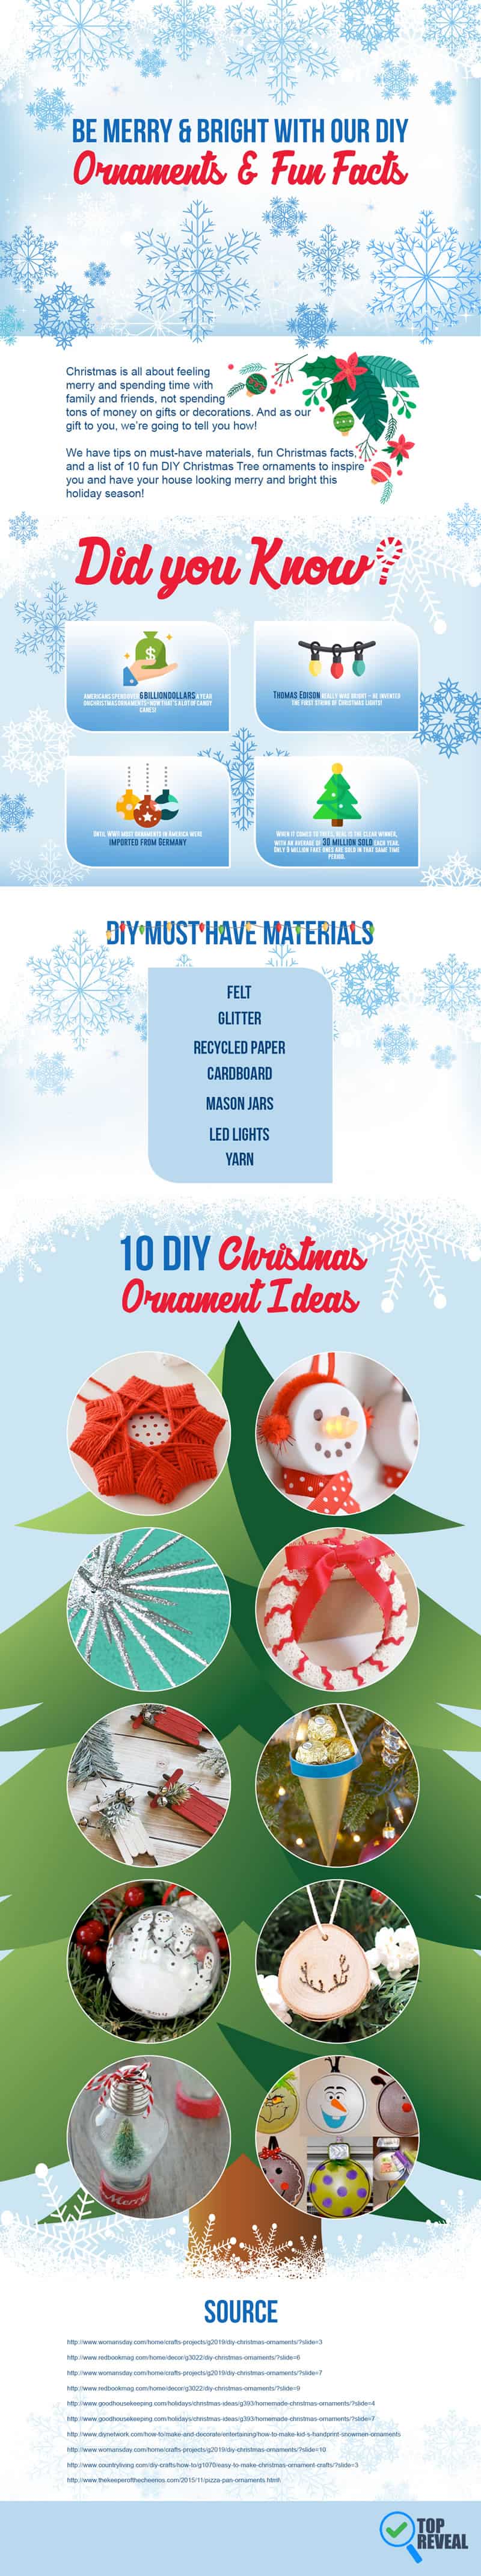 DIY Christmas Ornament Ideas Infographic